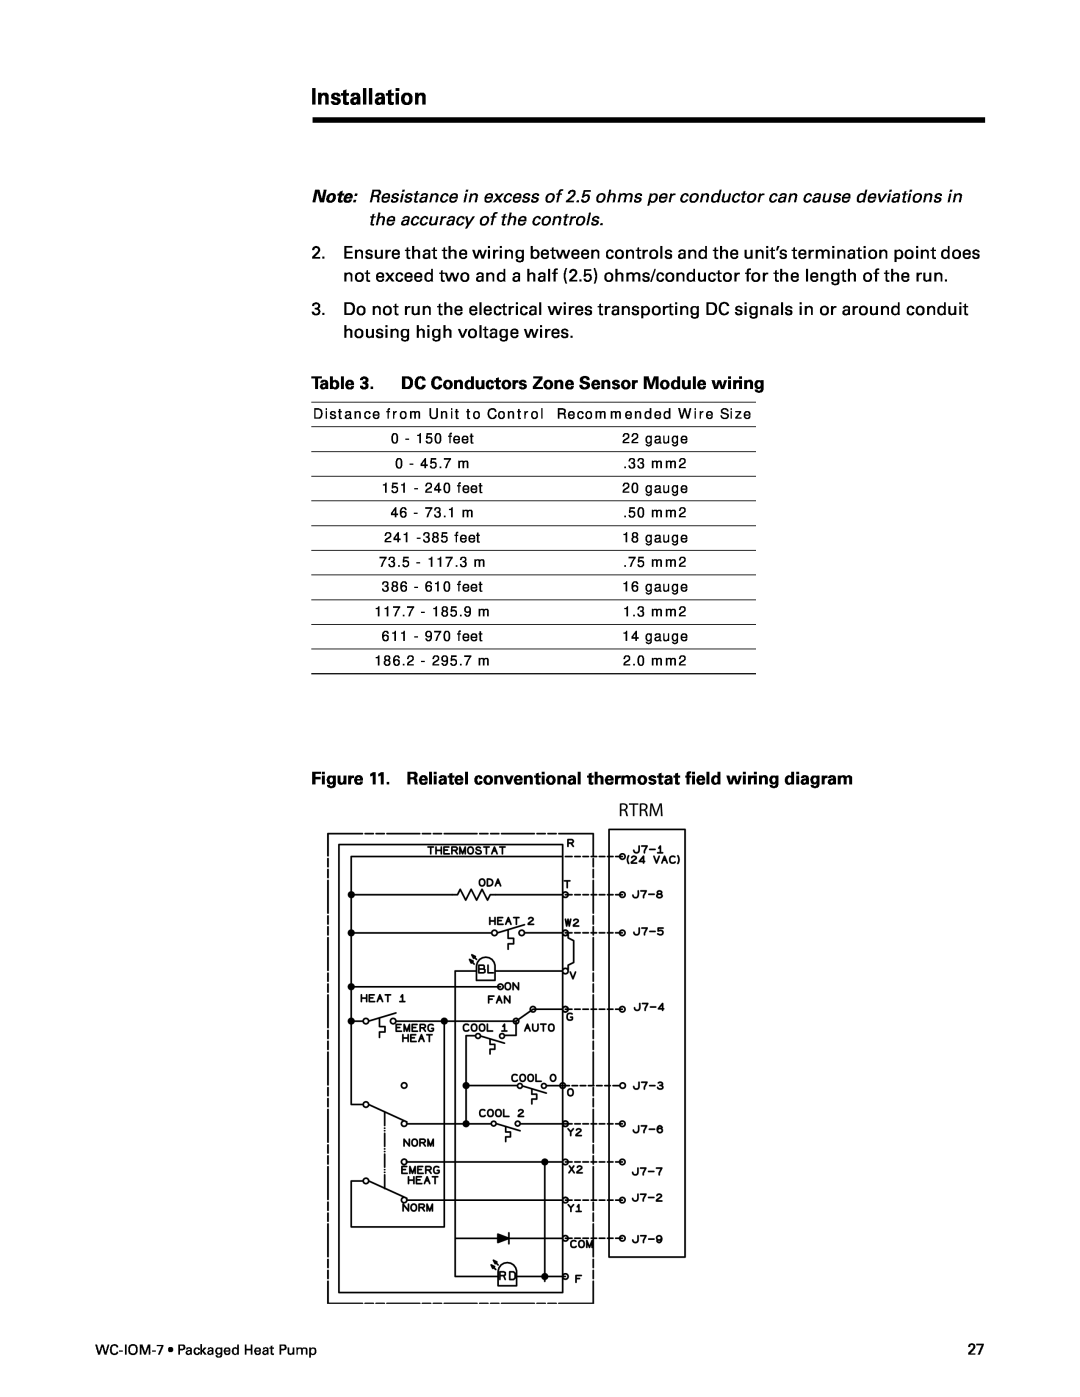 Trane WC-IOM-7 manual DC Conductors Zone Sensor Module wiring, Installation, Rtrm 